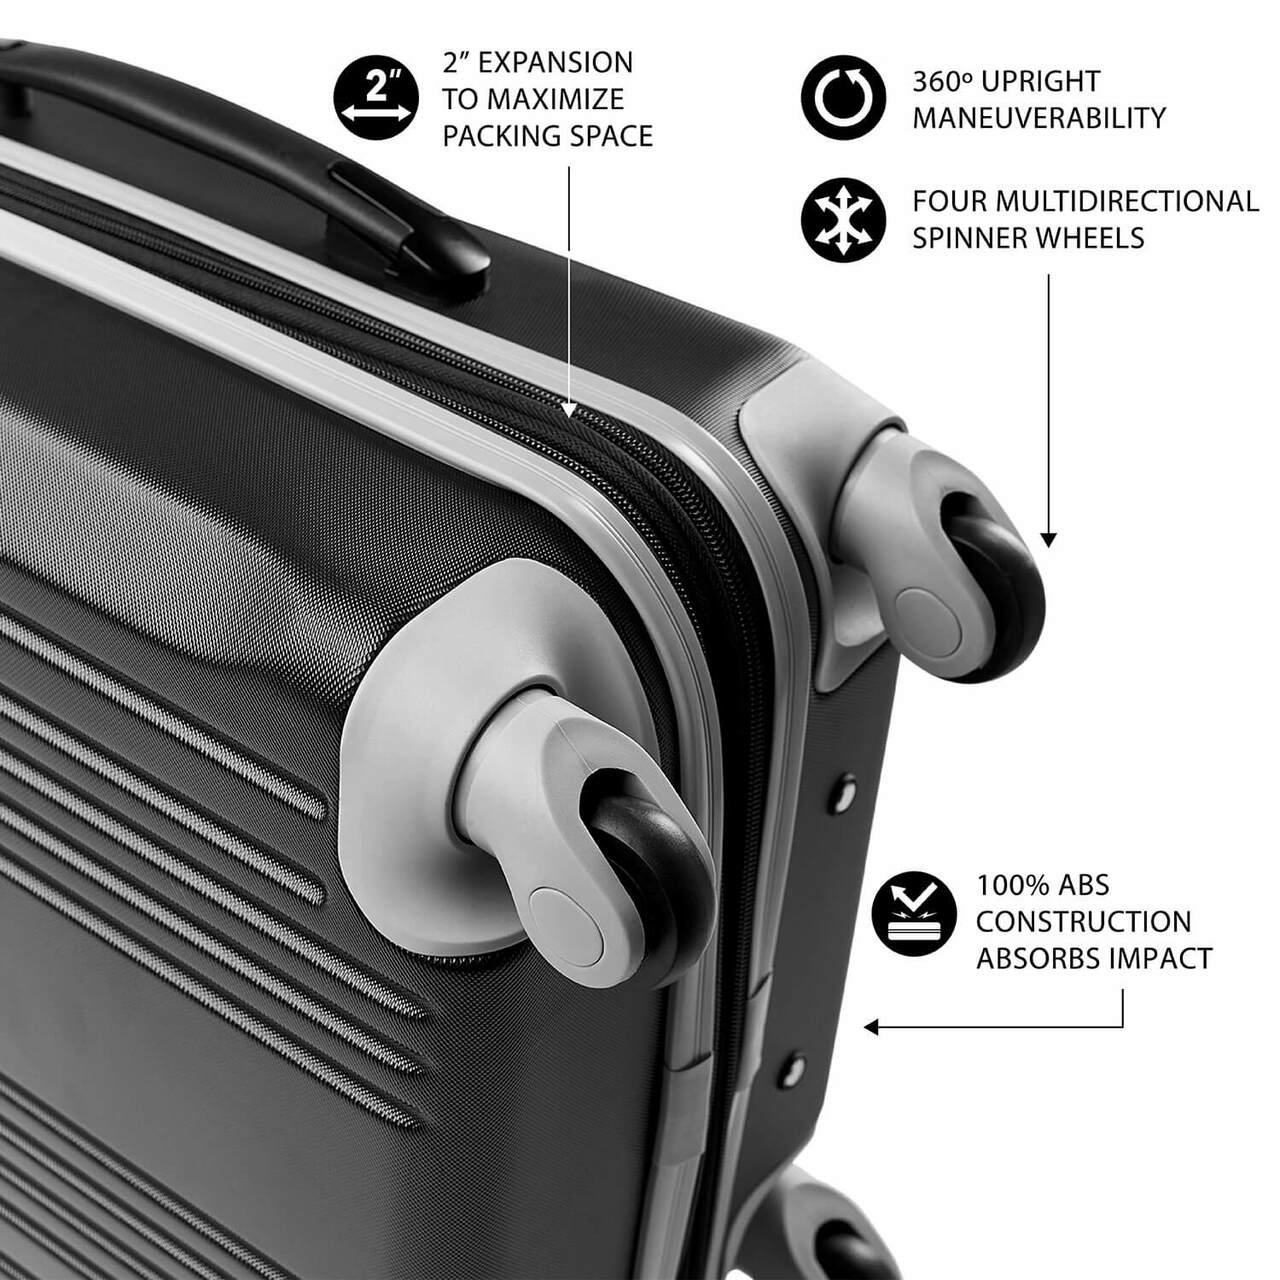 Oregon State Carry On Spinner Luggage | Oregon State Hardcase Two-Tone Luggage Carry-on Spinner in Black